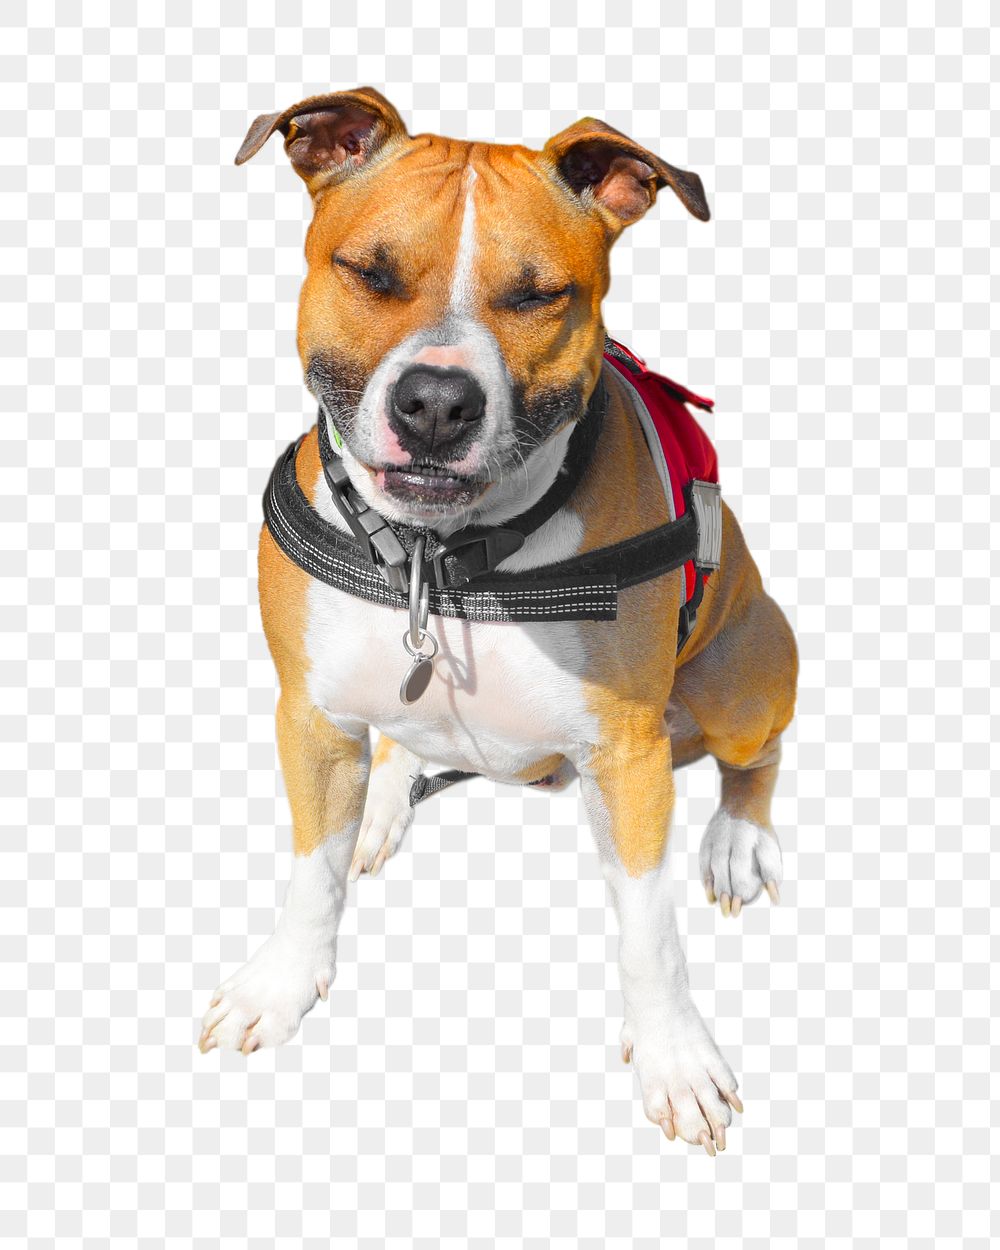 Staffordshire Bull Terrier dog png, transparent background